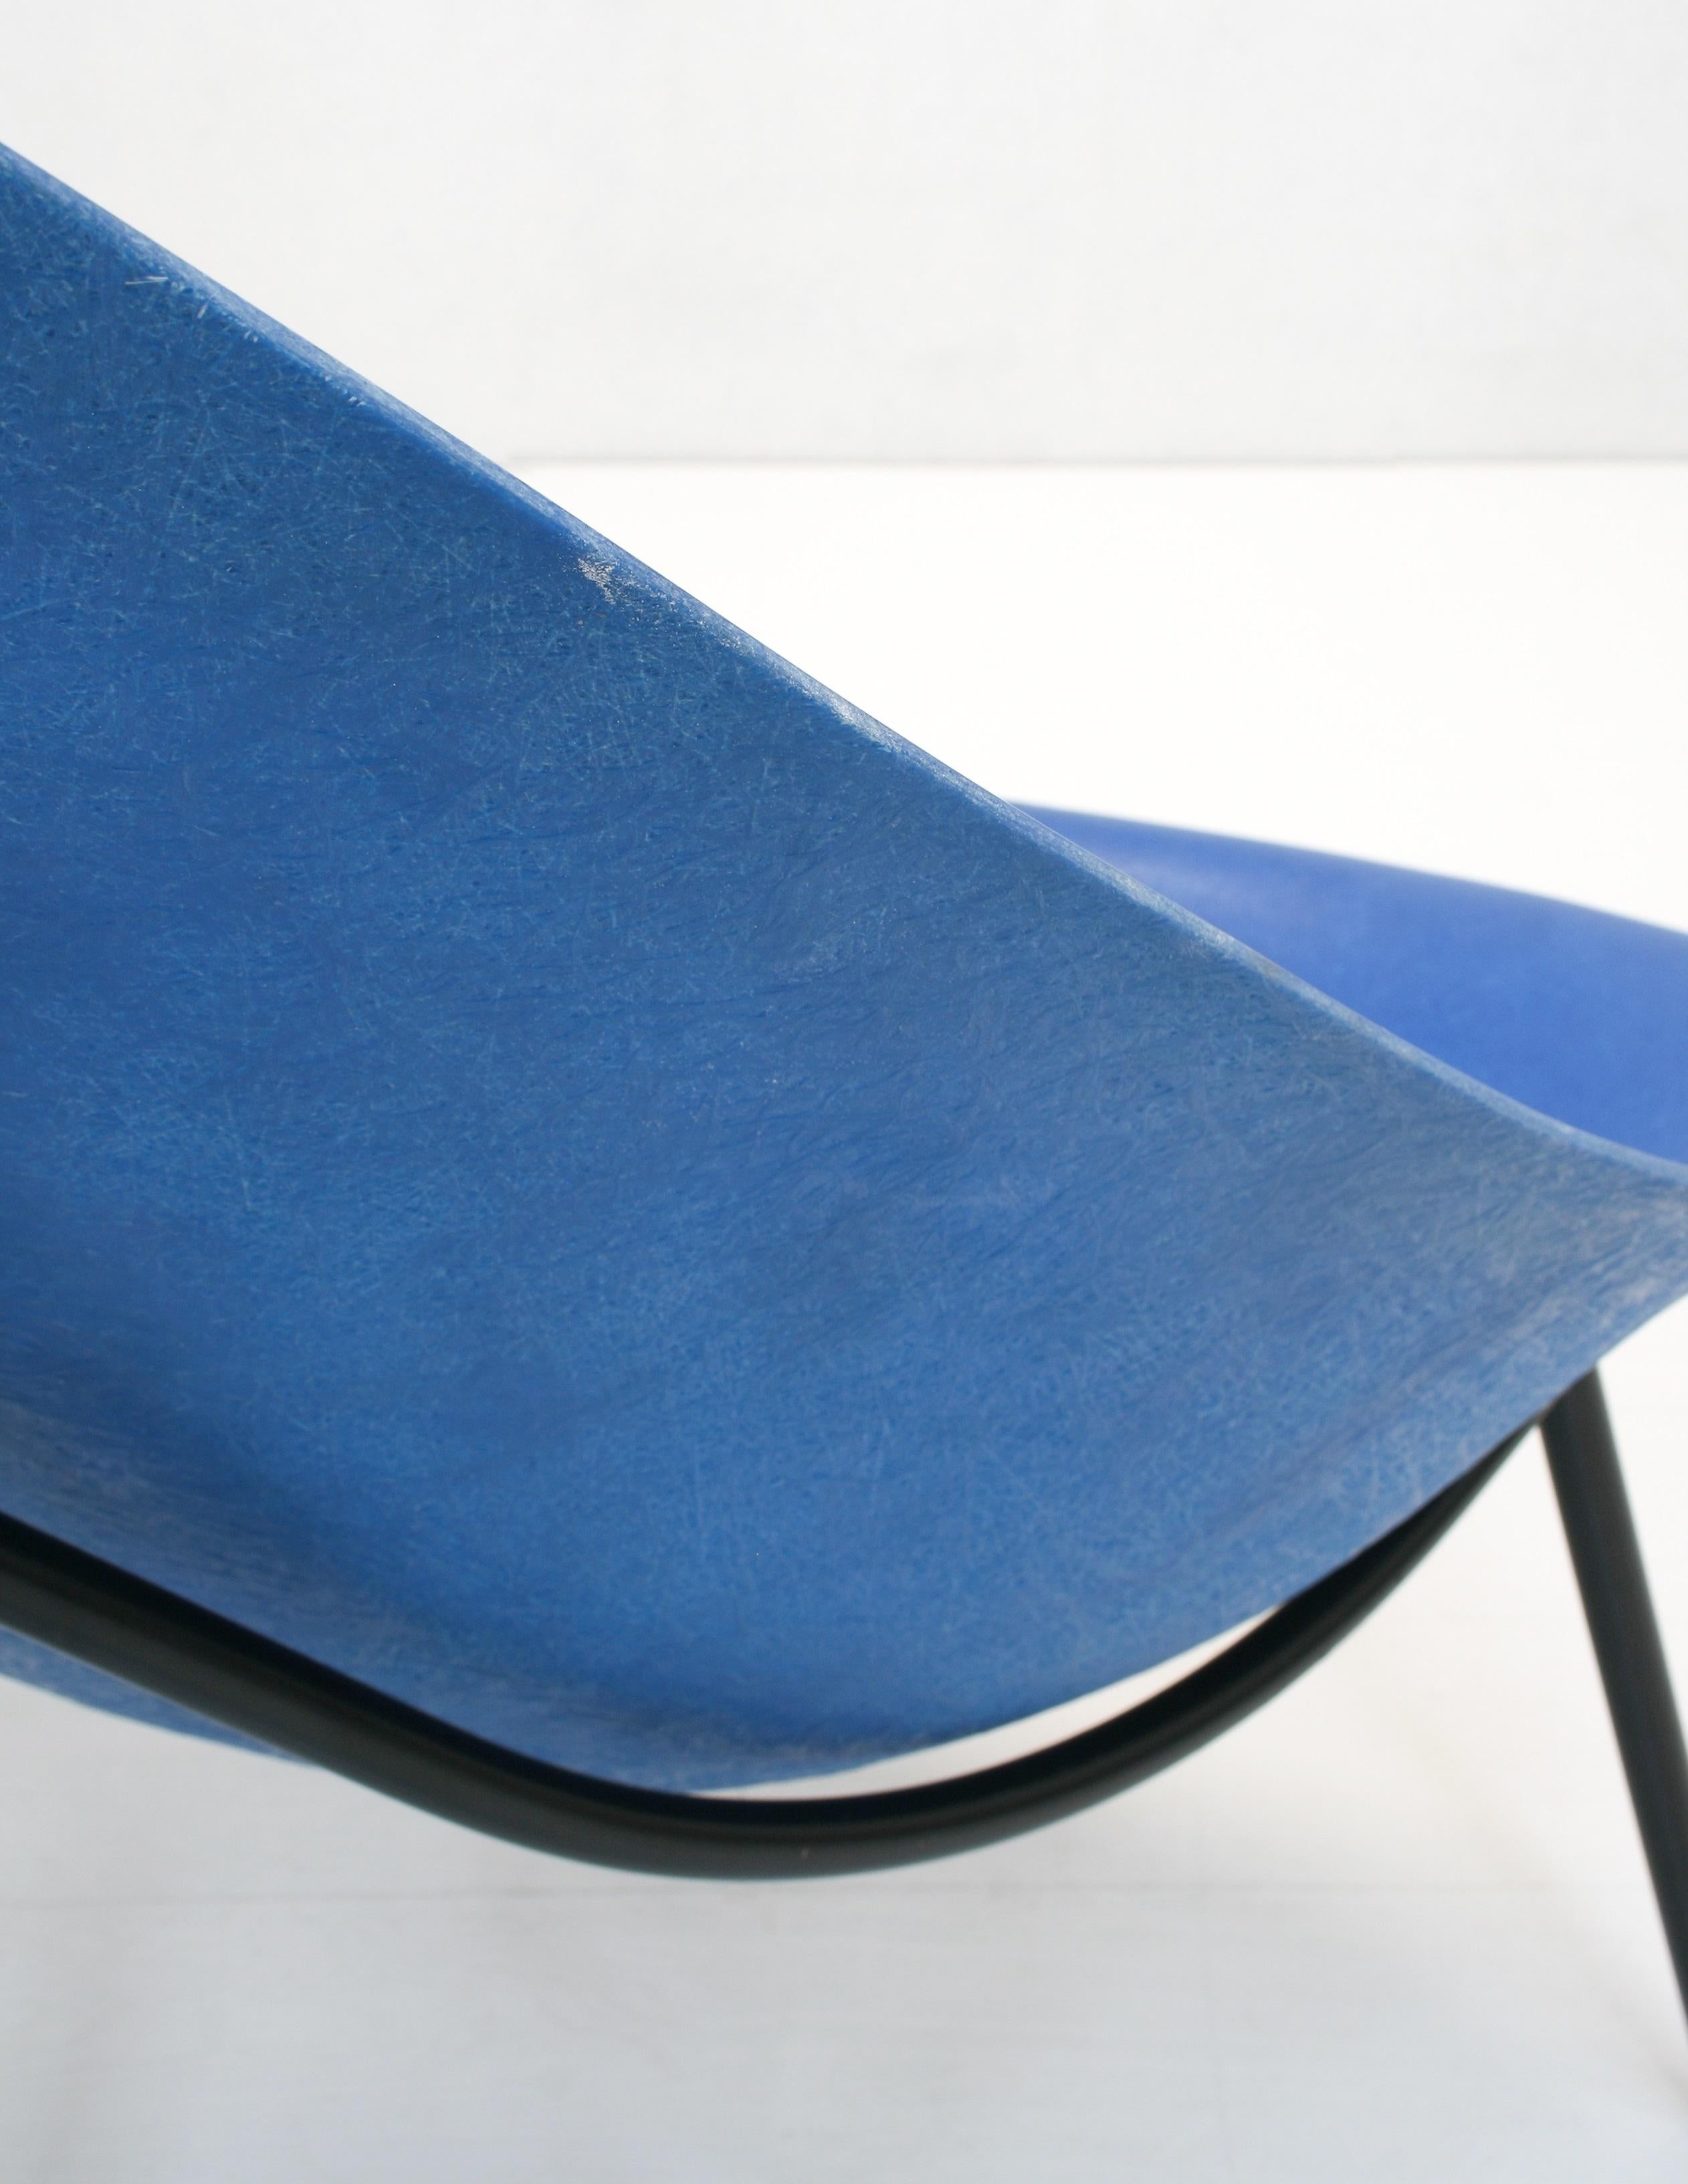 French Modernist Tripod Fiberglass Lounge Chair by Ed Mérat For Sale 1